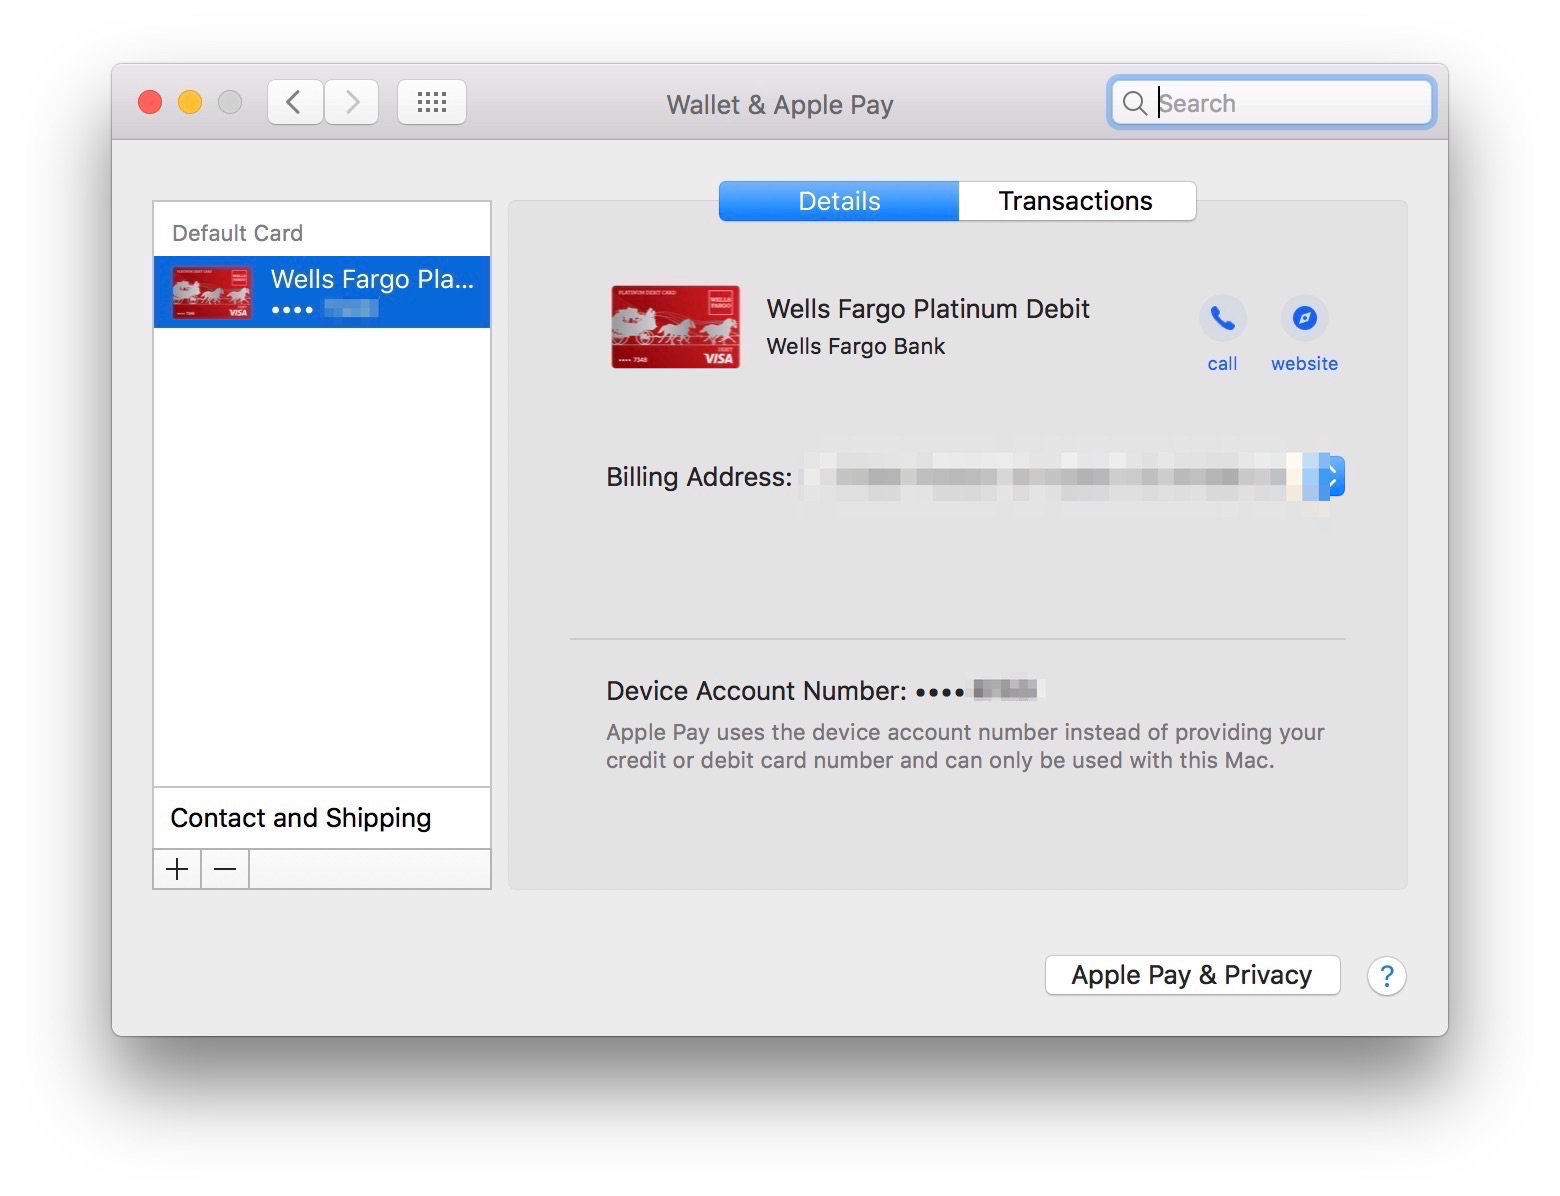 apple-pay-setup-on-macbook-pro-with-touchbar.jpg